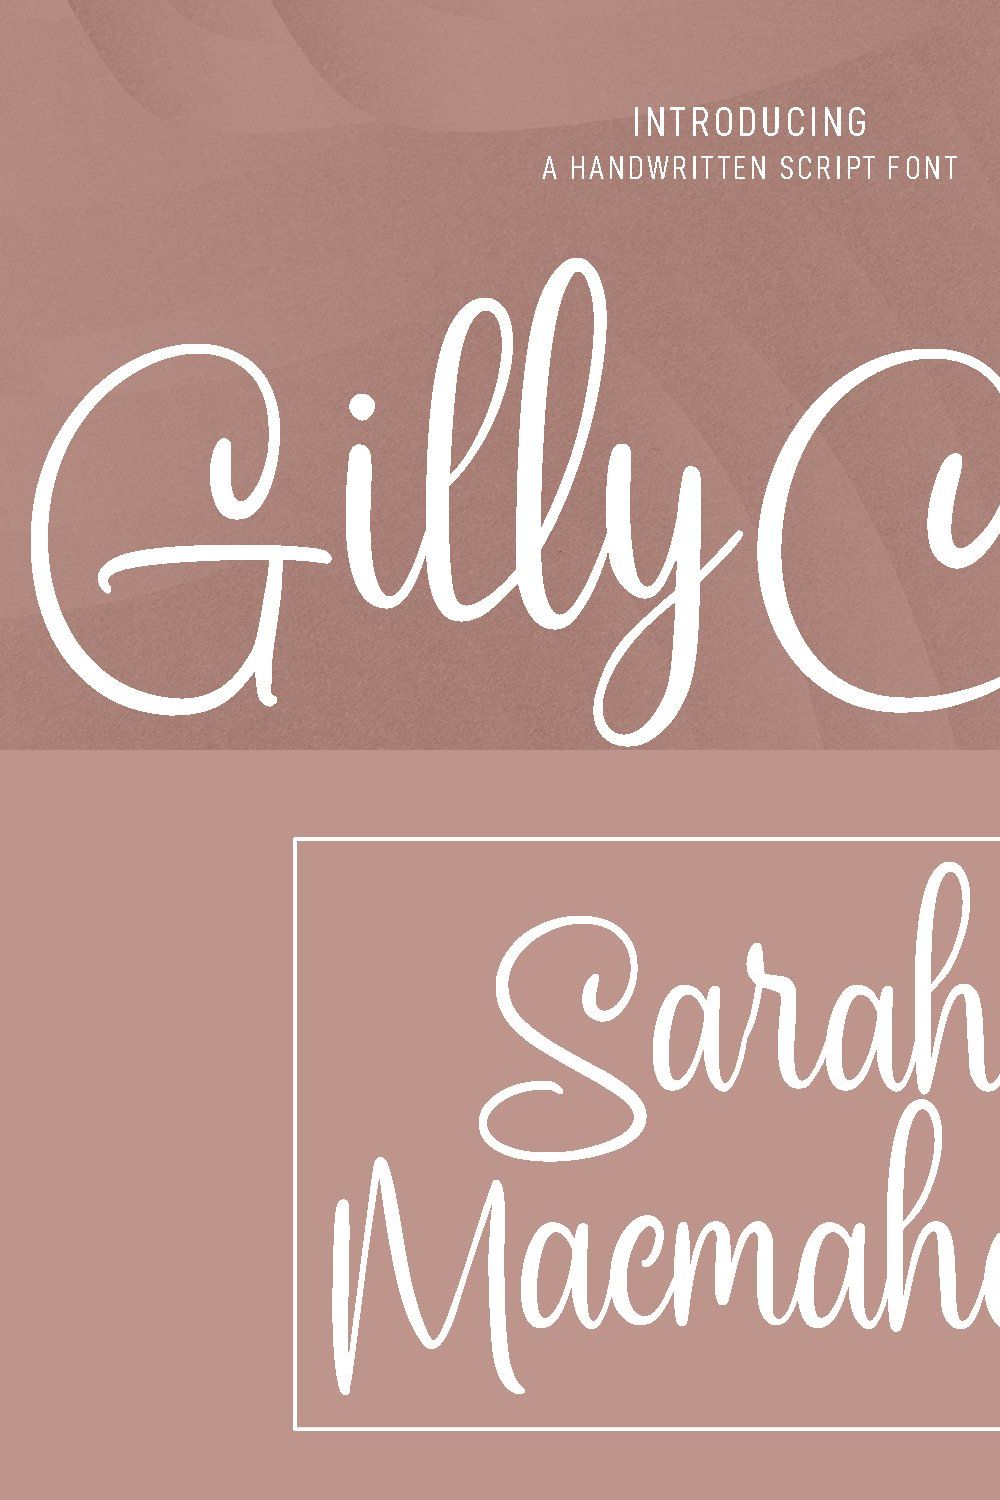 Gilly Chics Handwritten Script Font pinterest preview image.